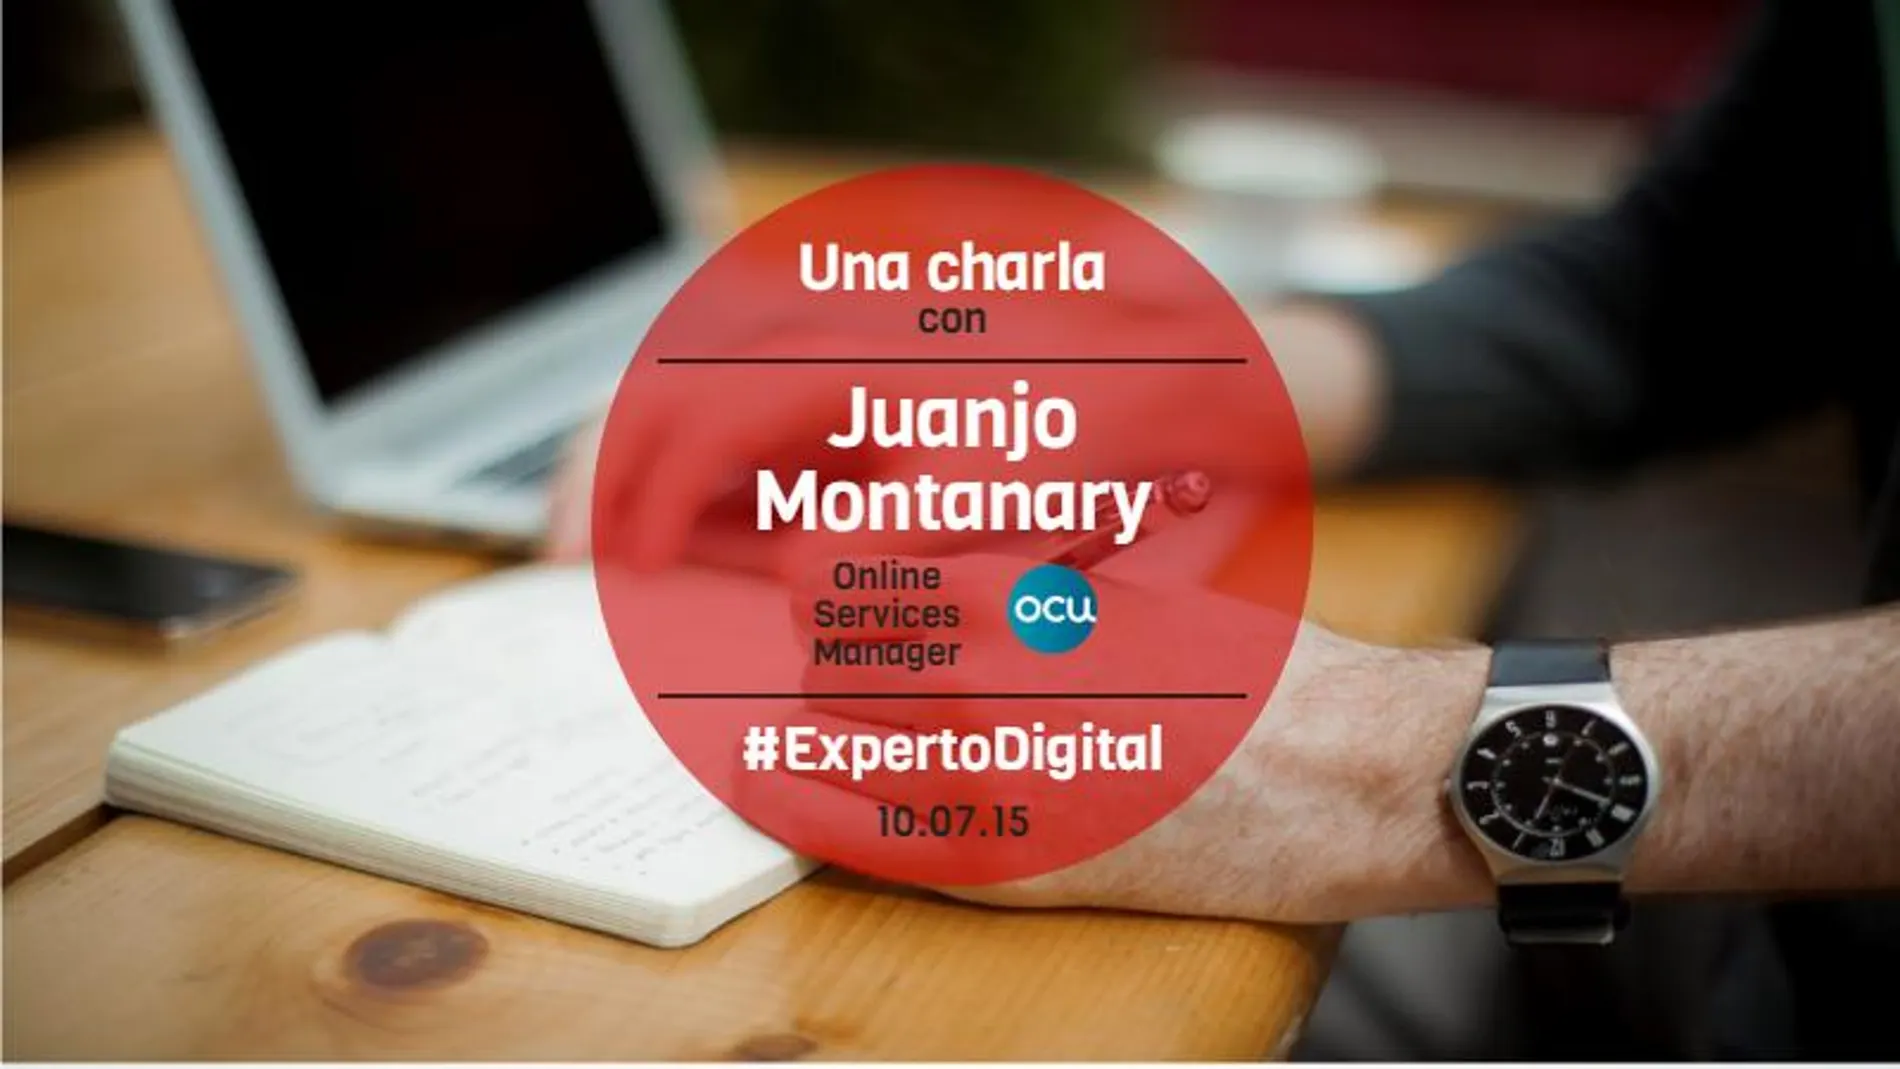 Experto digital: Juanjo Montanary